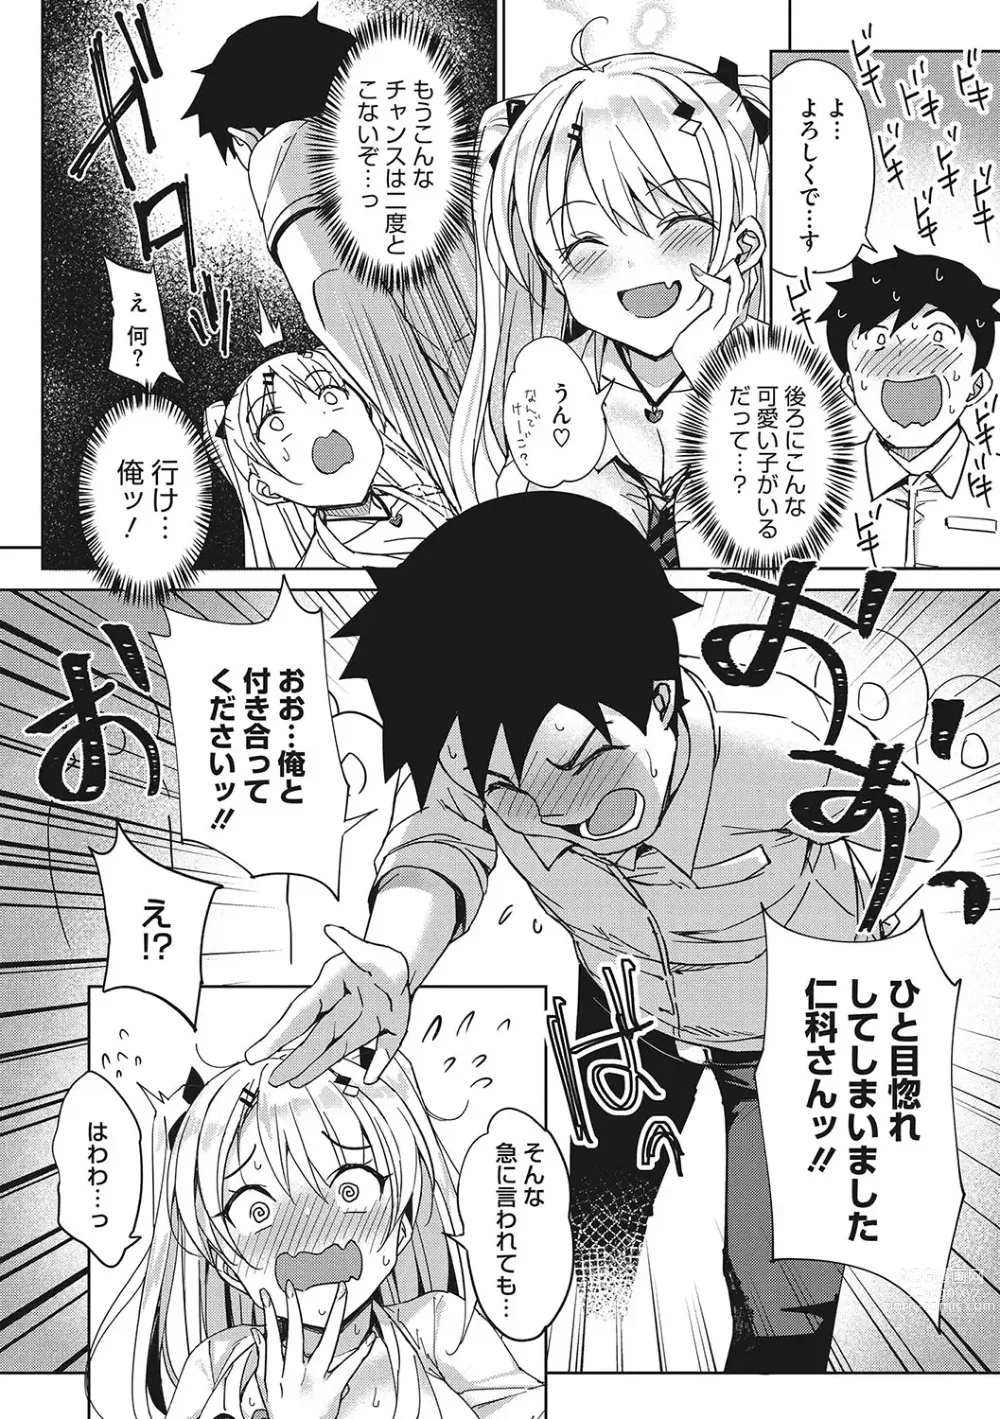 Page 5 of manga Motto Watashi de Shite Hoshii - I want it to be me more